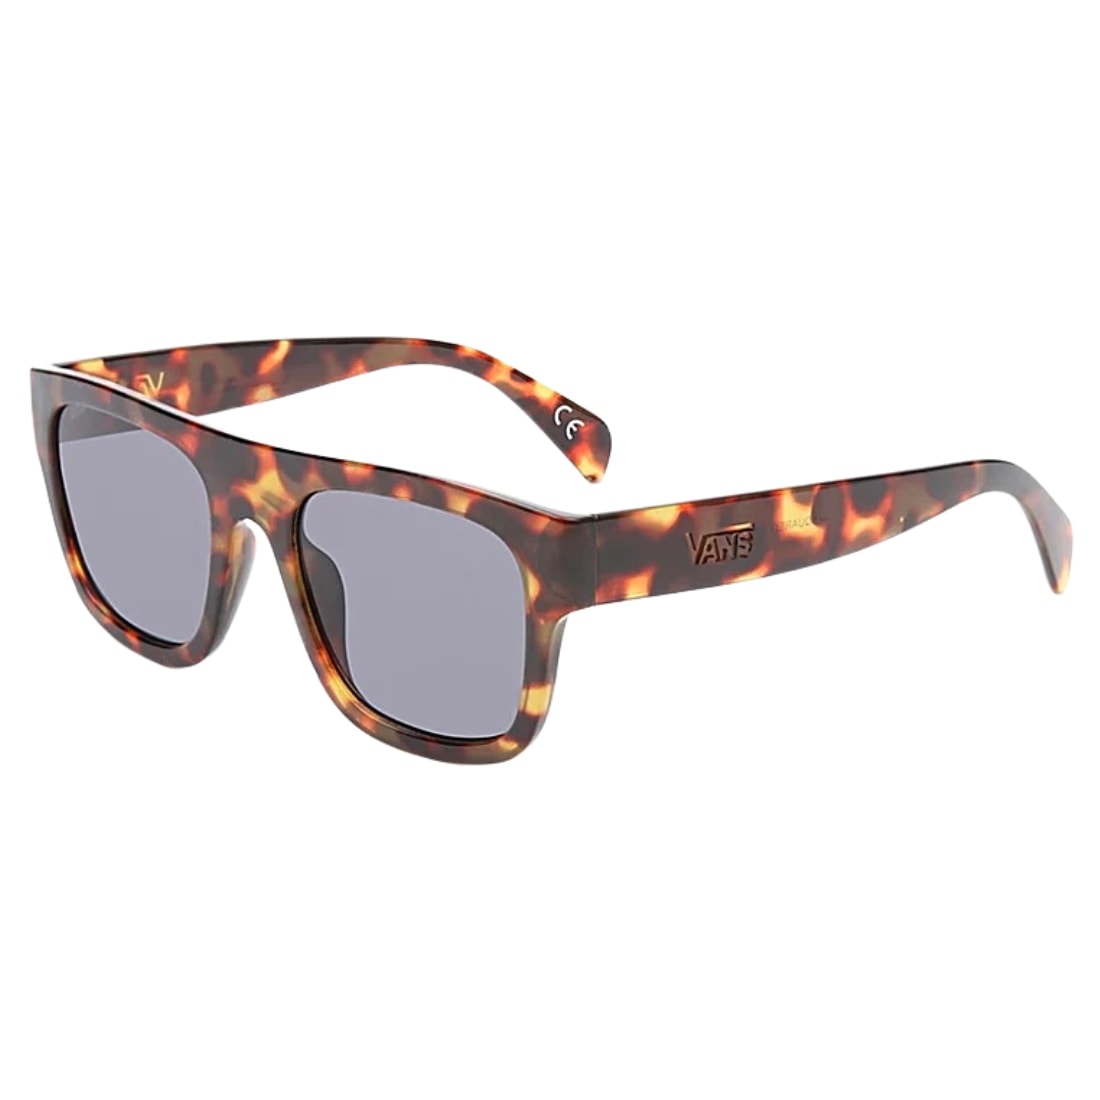 Vans Squared Off Shades Sunglasses - Cheetah Tortoise - Square/Rectangular Sunglasses by Vans